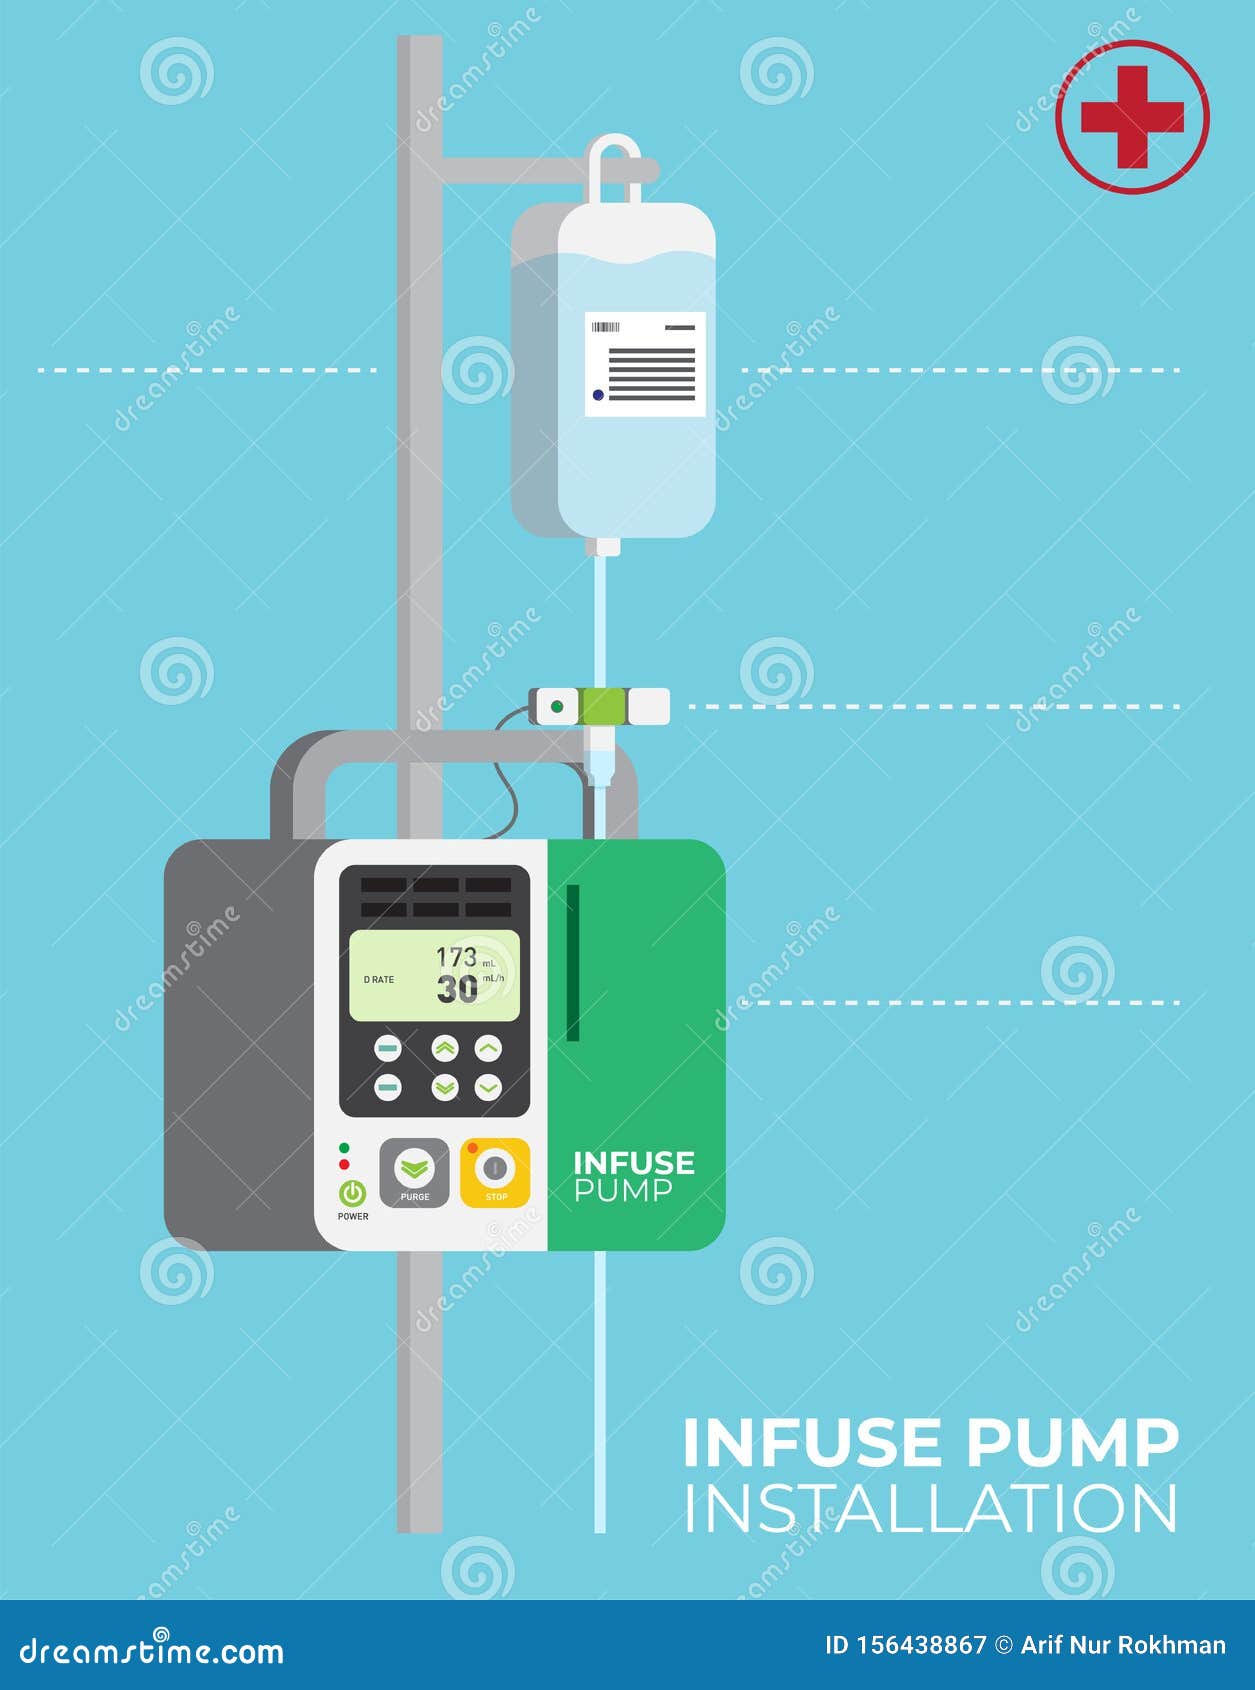 infuse pump installation medical equipment